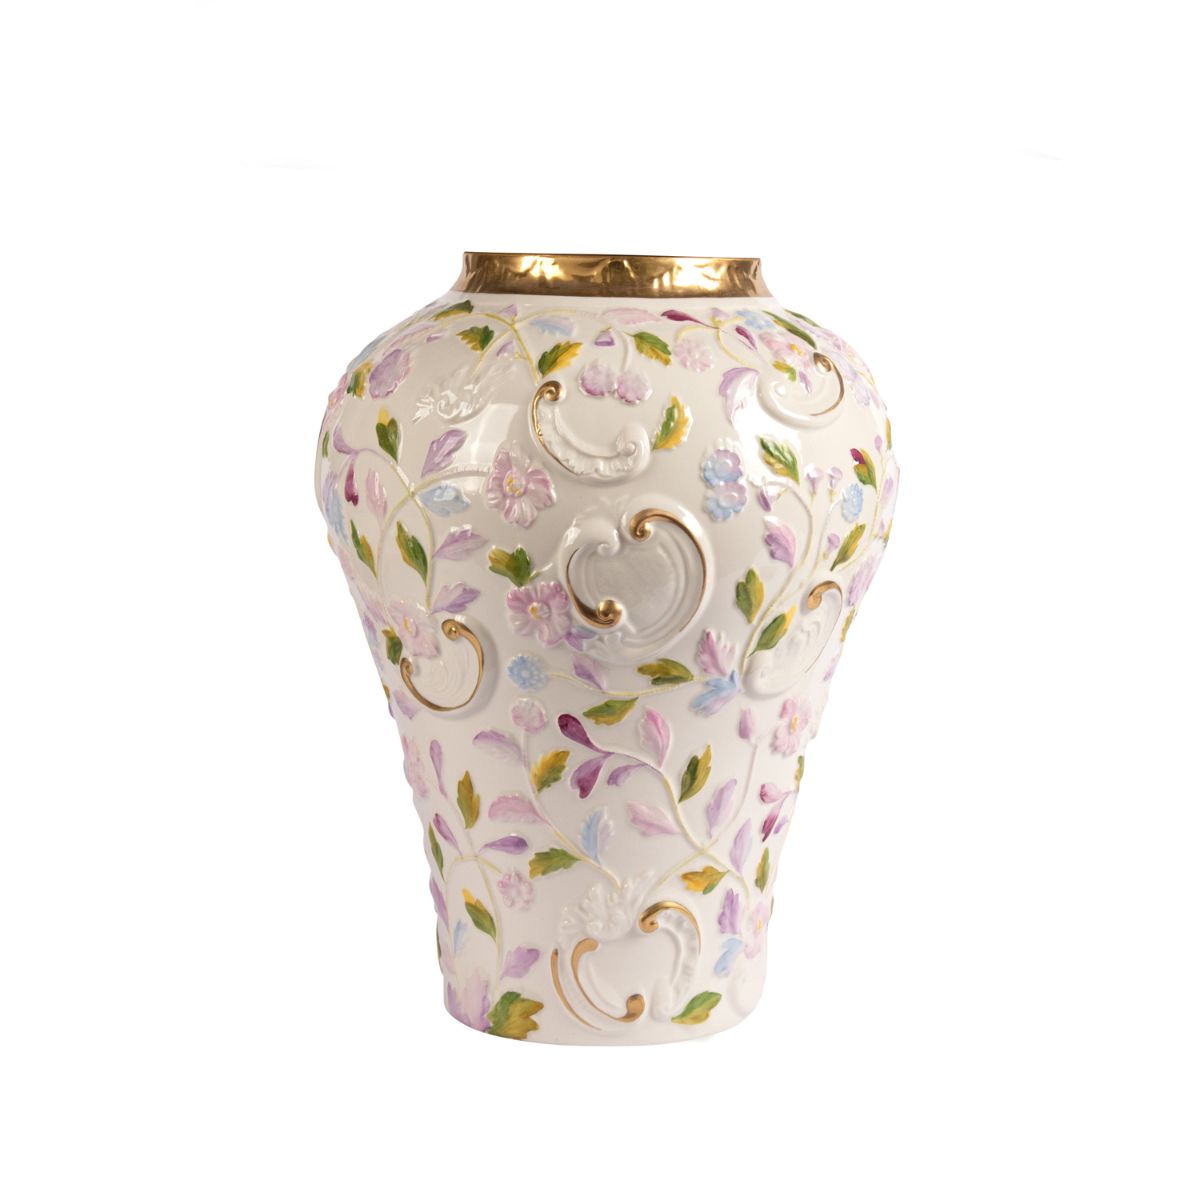 Taormina Large Vase - Multicolor & Gold